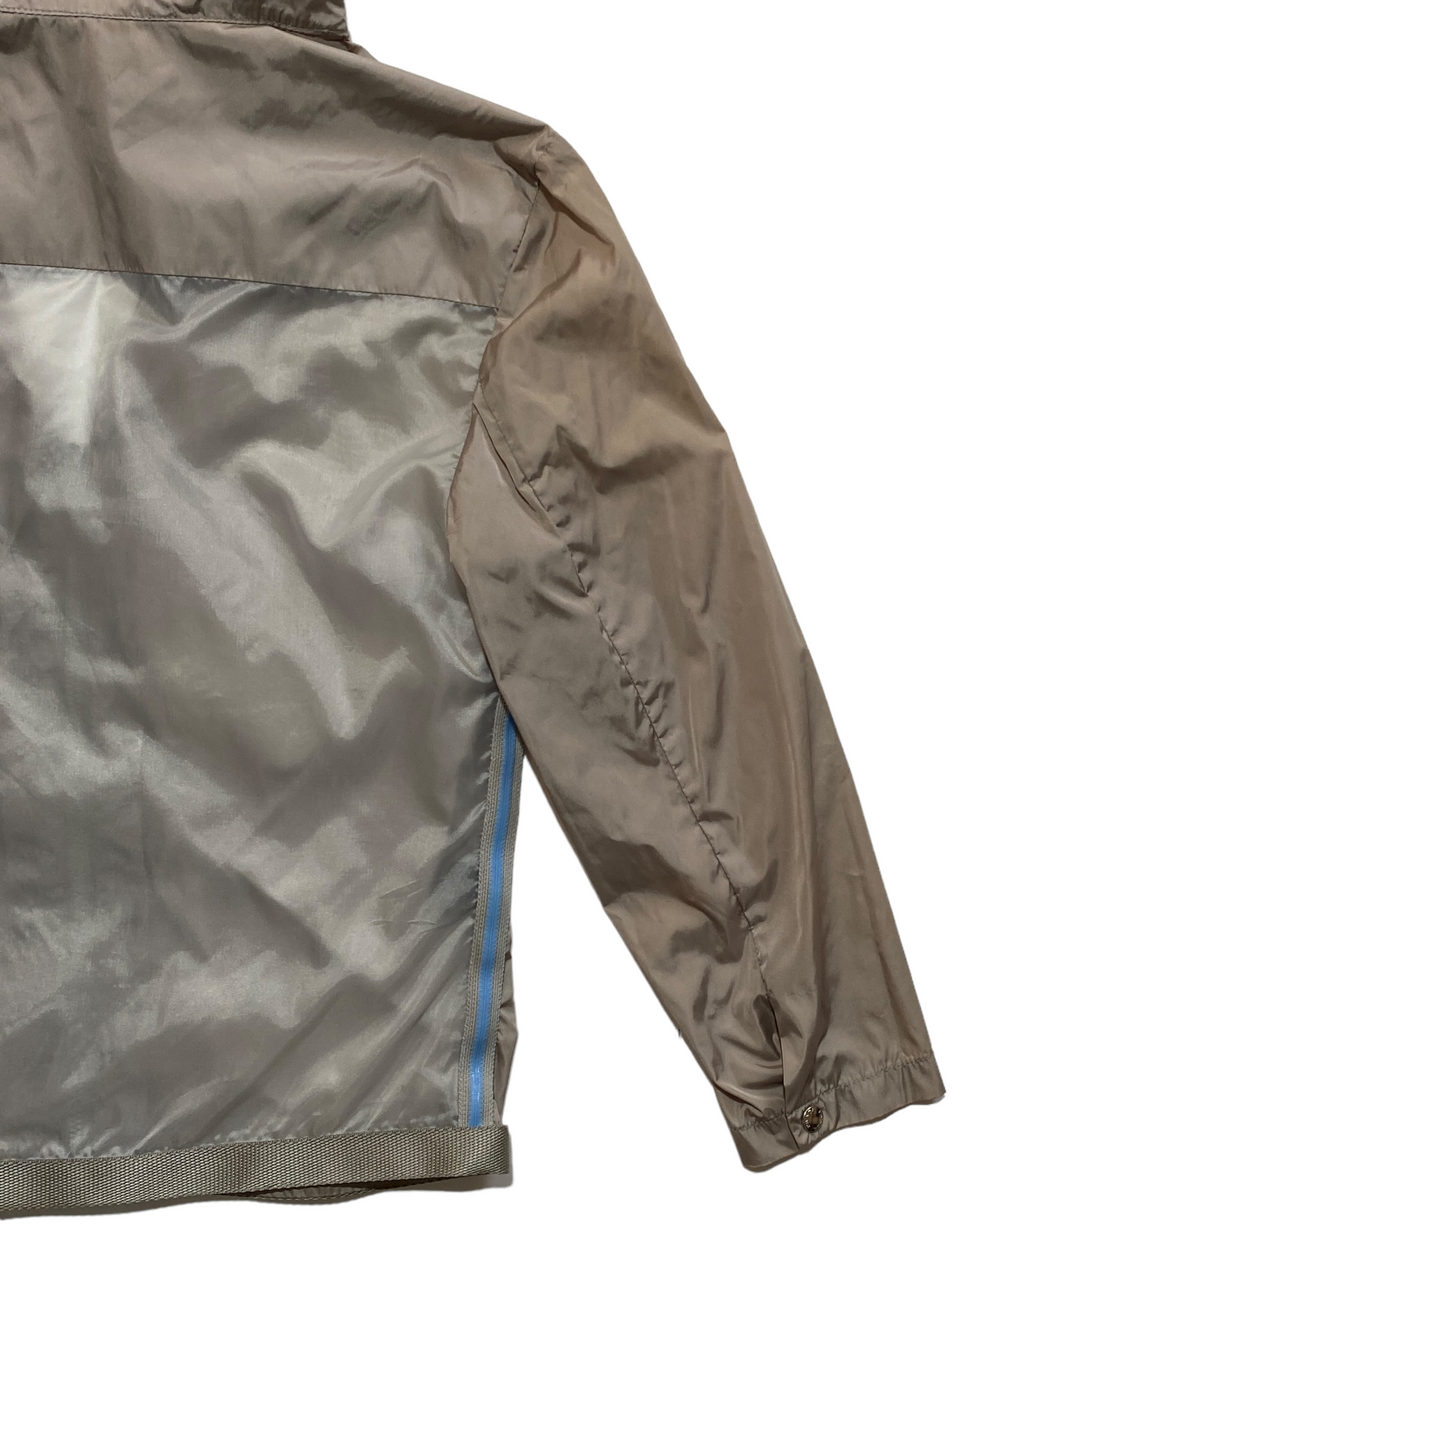 S/S 2000 Prada Sport track jacket (S)